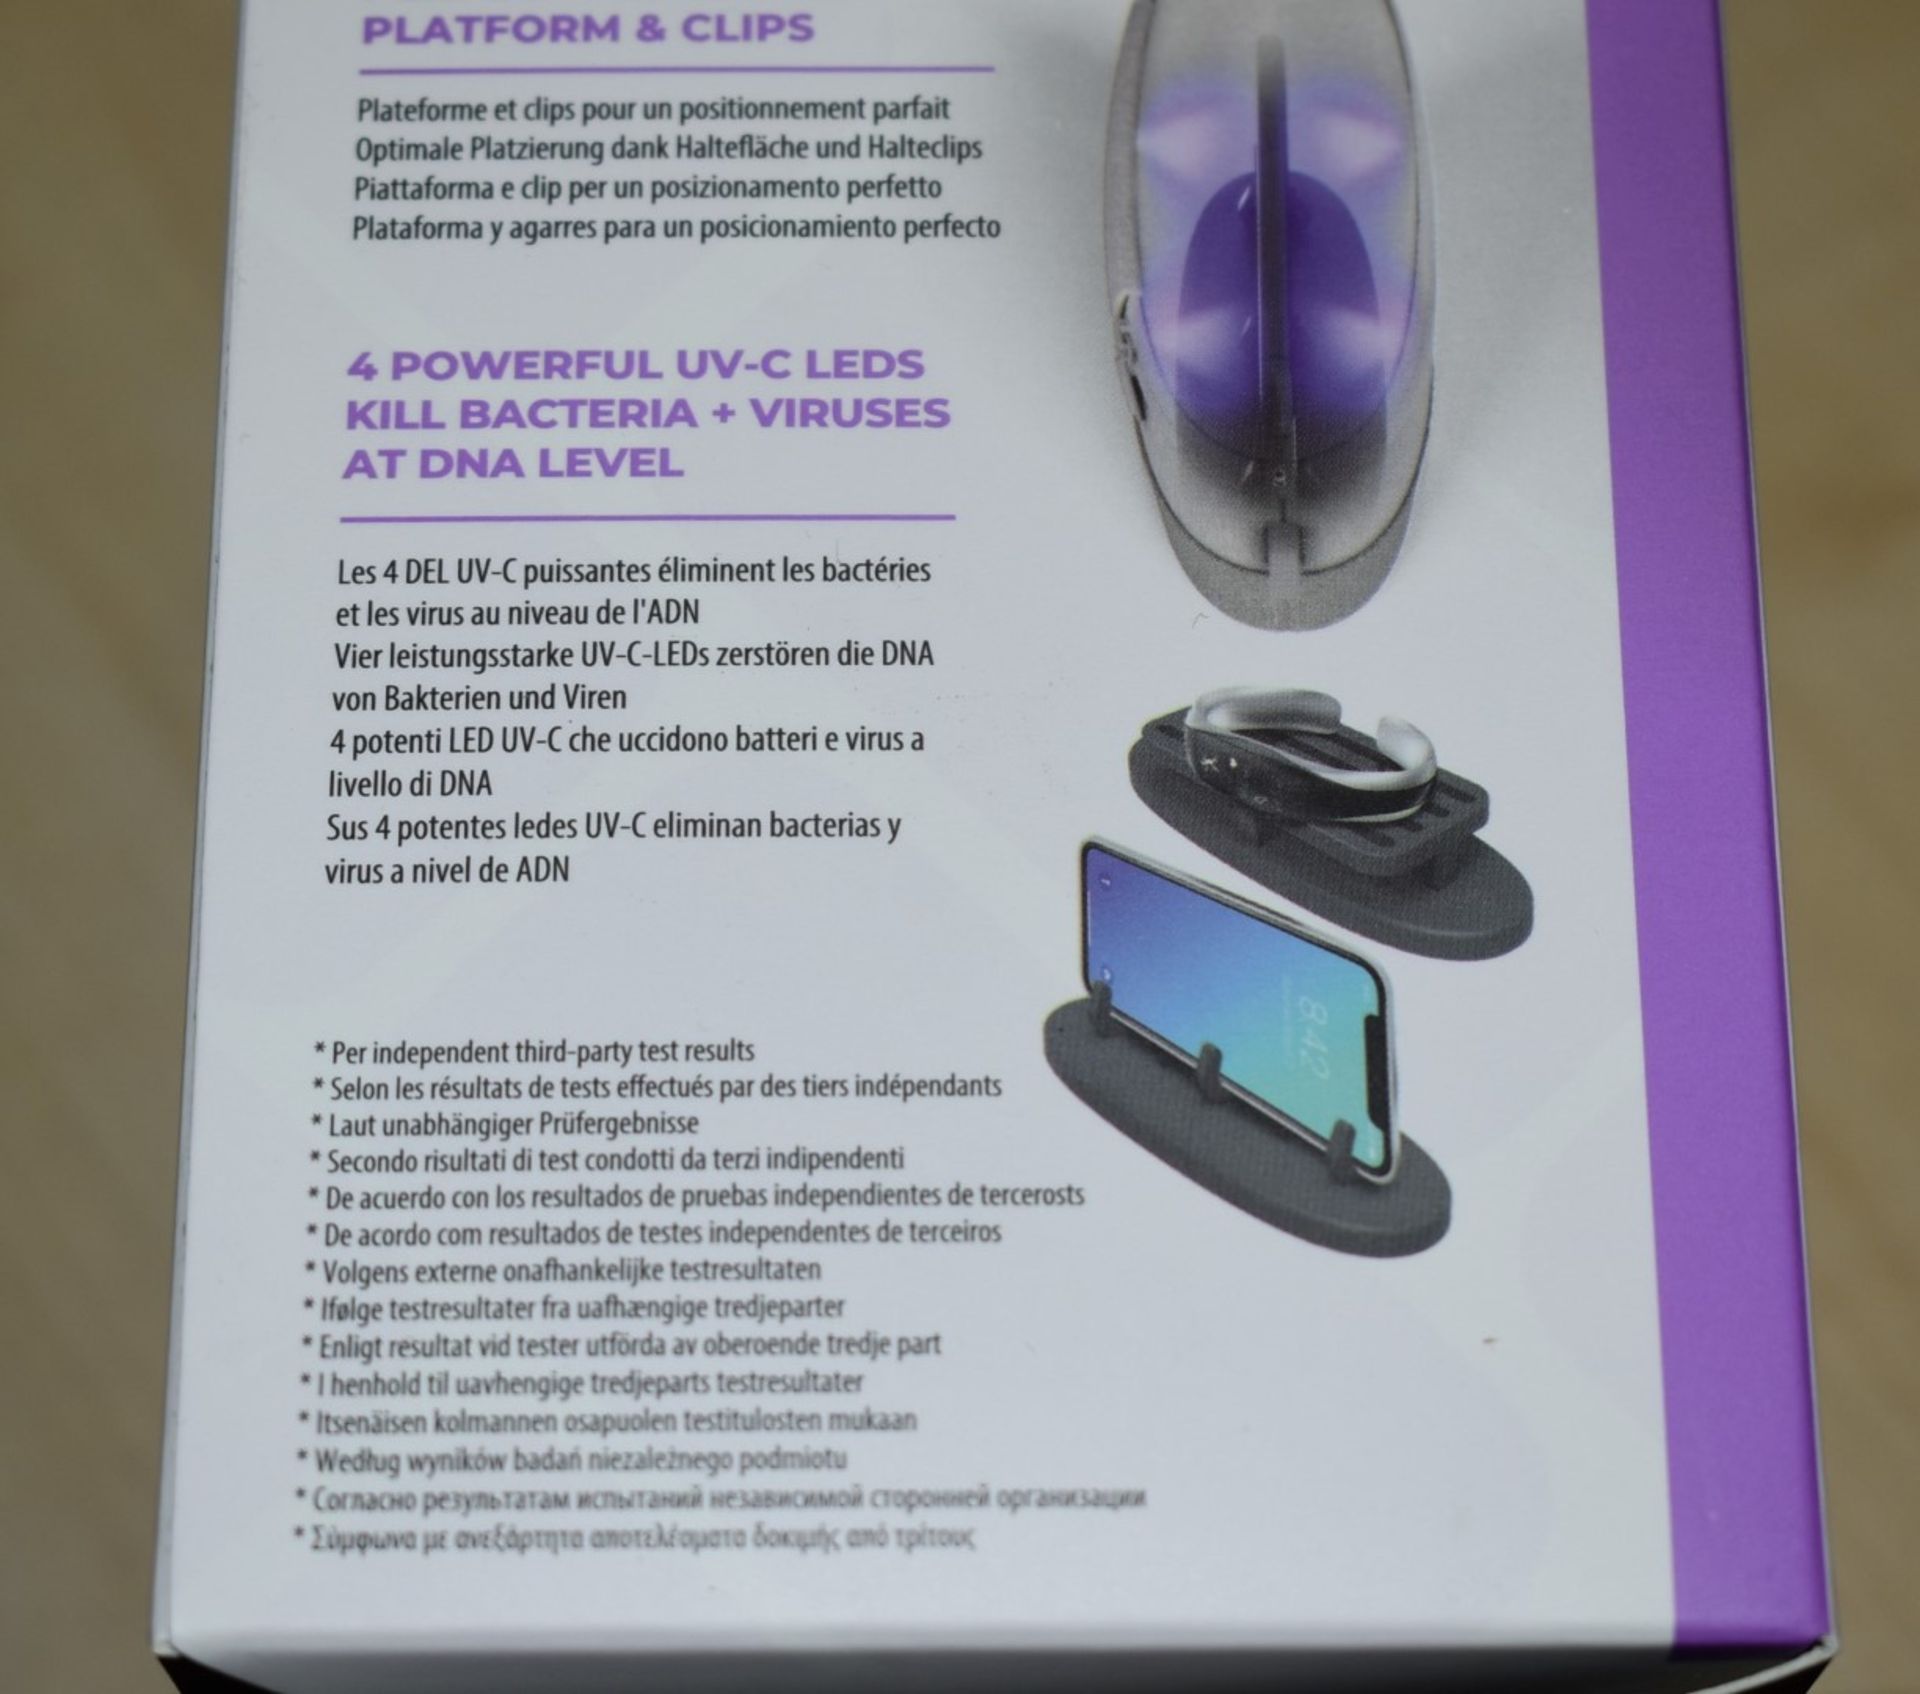 4 x Homedics UV Clean Portable Sanitiser Bags - Kills Upto 99.9% of Bacteria & Viruses in Just 60 - Image 9 of 19